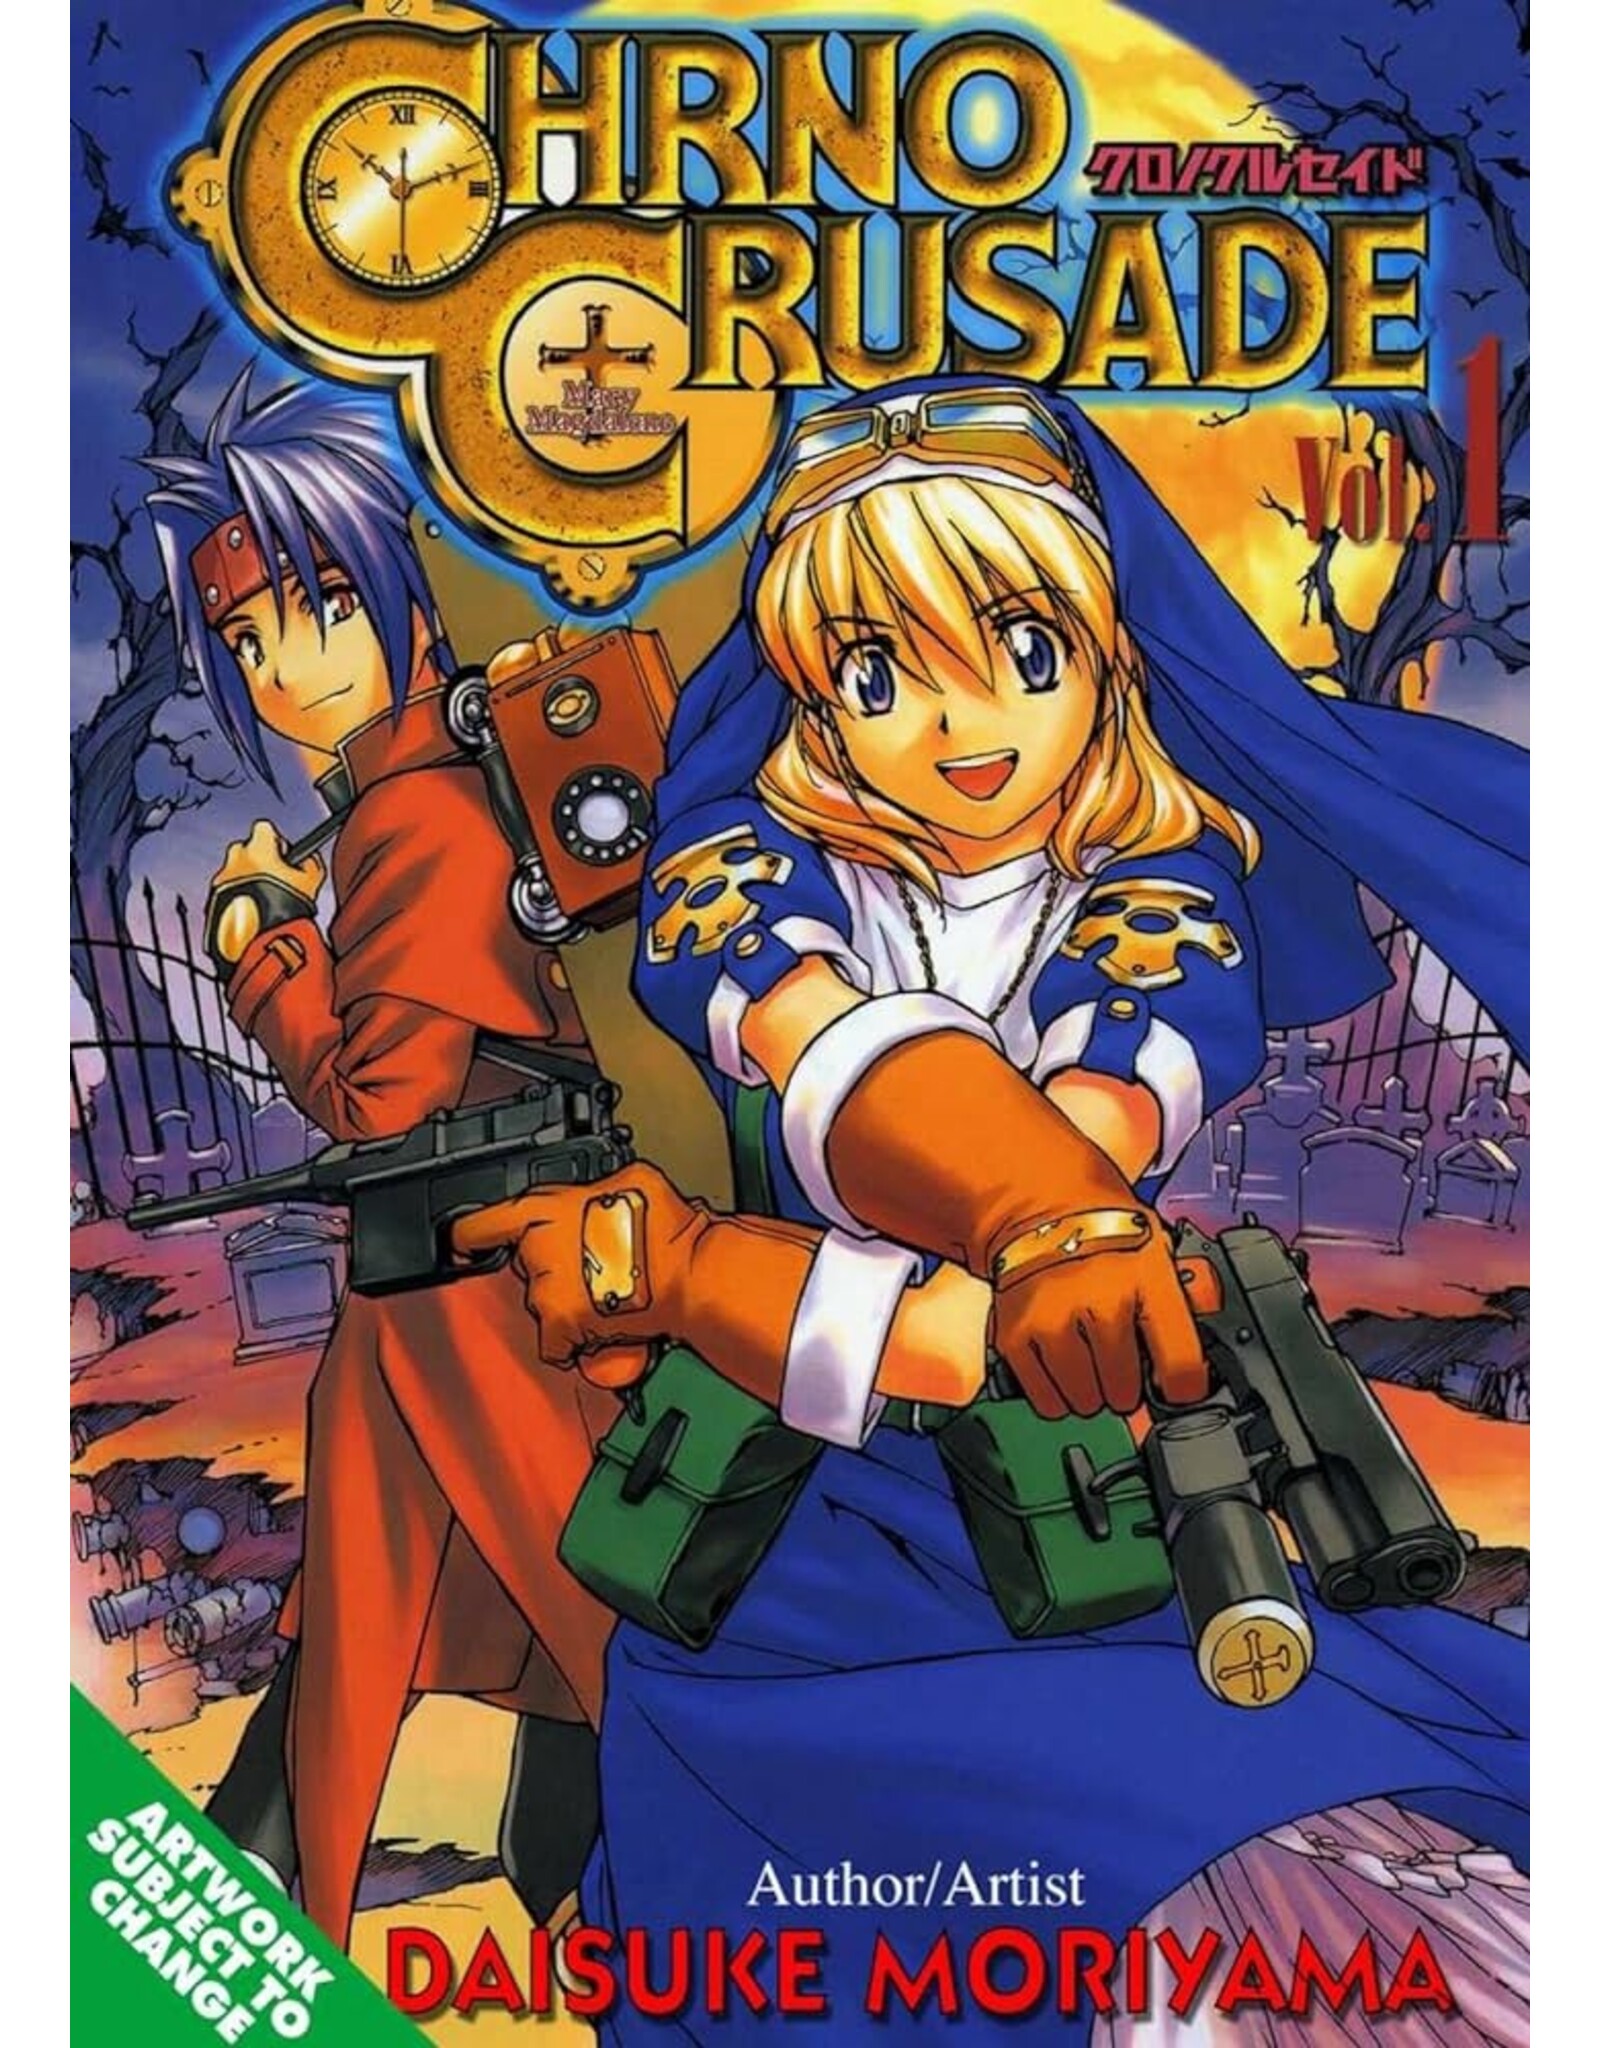 Chrono Crusade vol. 1-2 Manga Bundle (used)